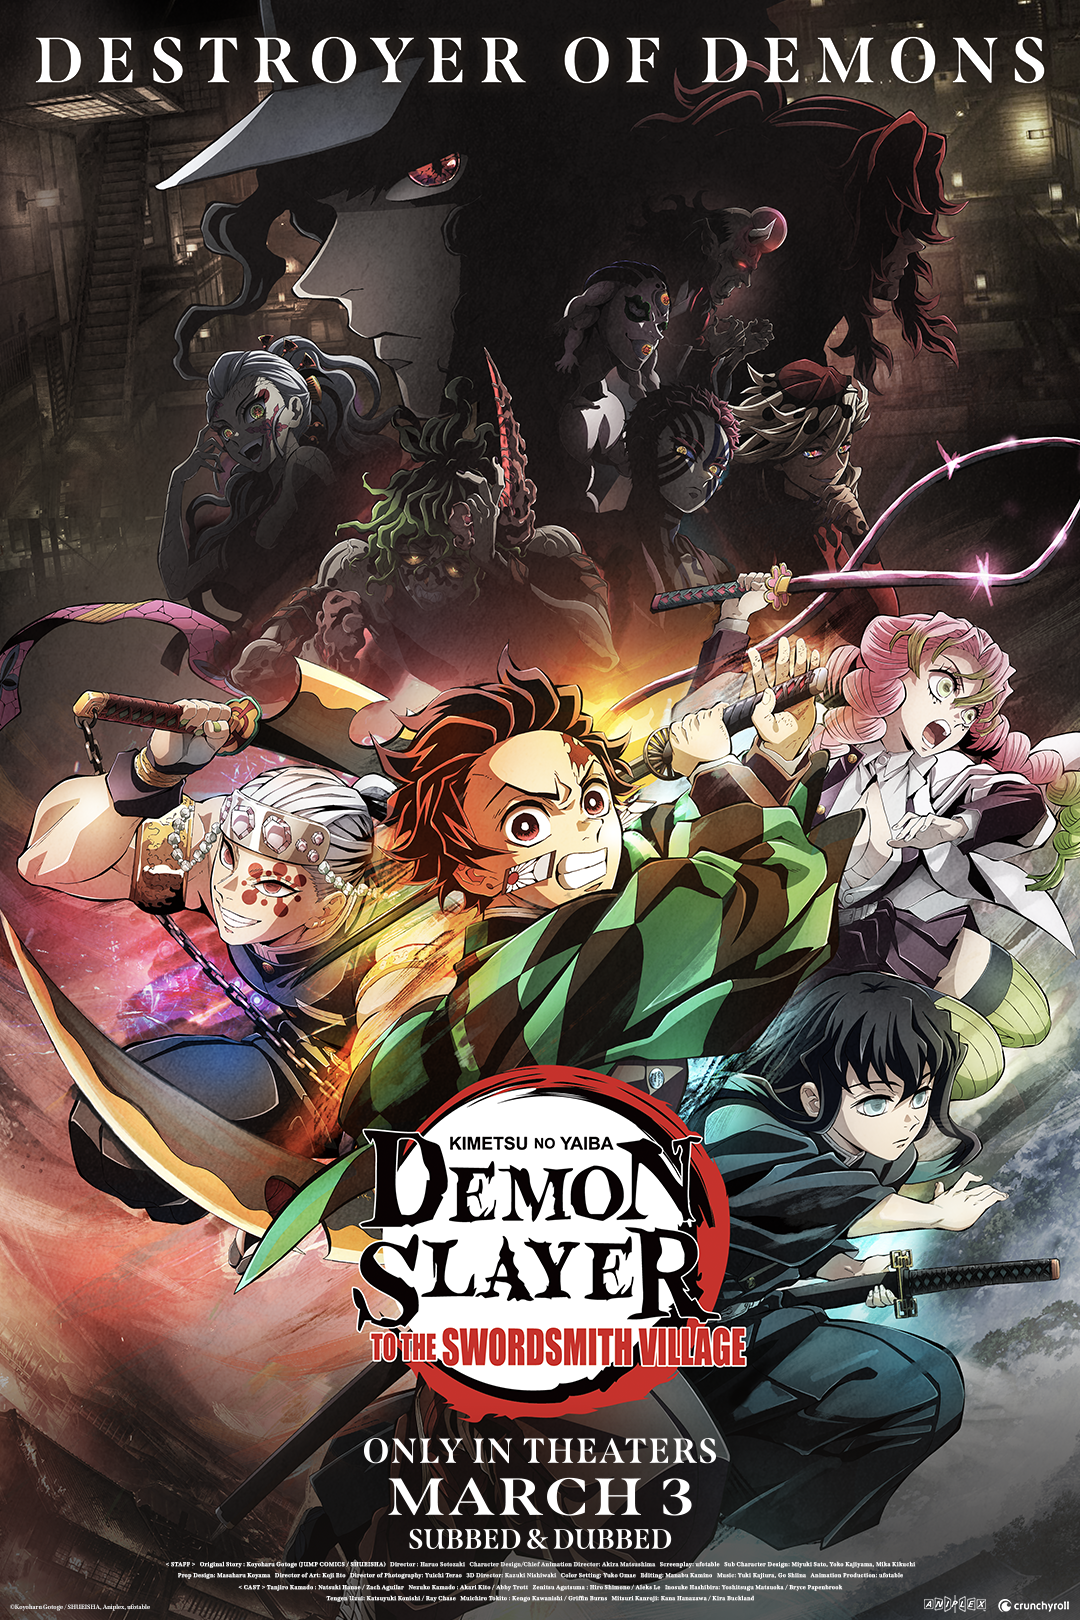 Demon Slayer: Kimetsu no Yaiba (English) on X: Found you! 🔍 via Episode 6  of Demon Slayer: Kimetsu no Yaiba Swordsmith Village Arc streaming now on  @Crunchyroll  / X